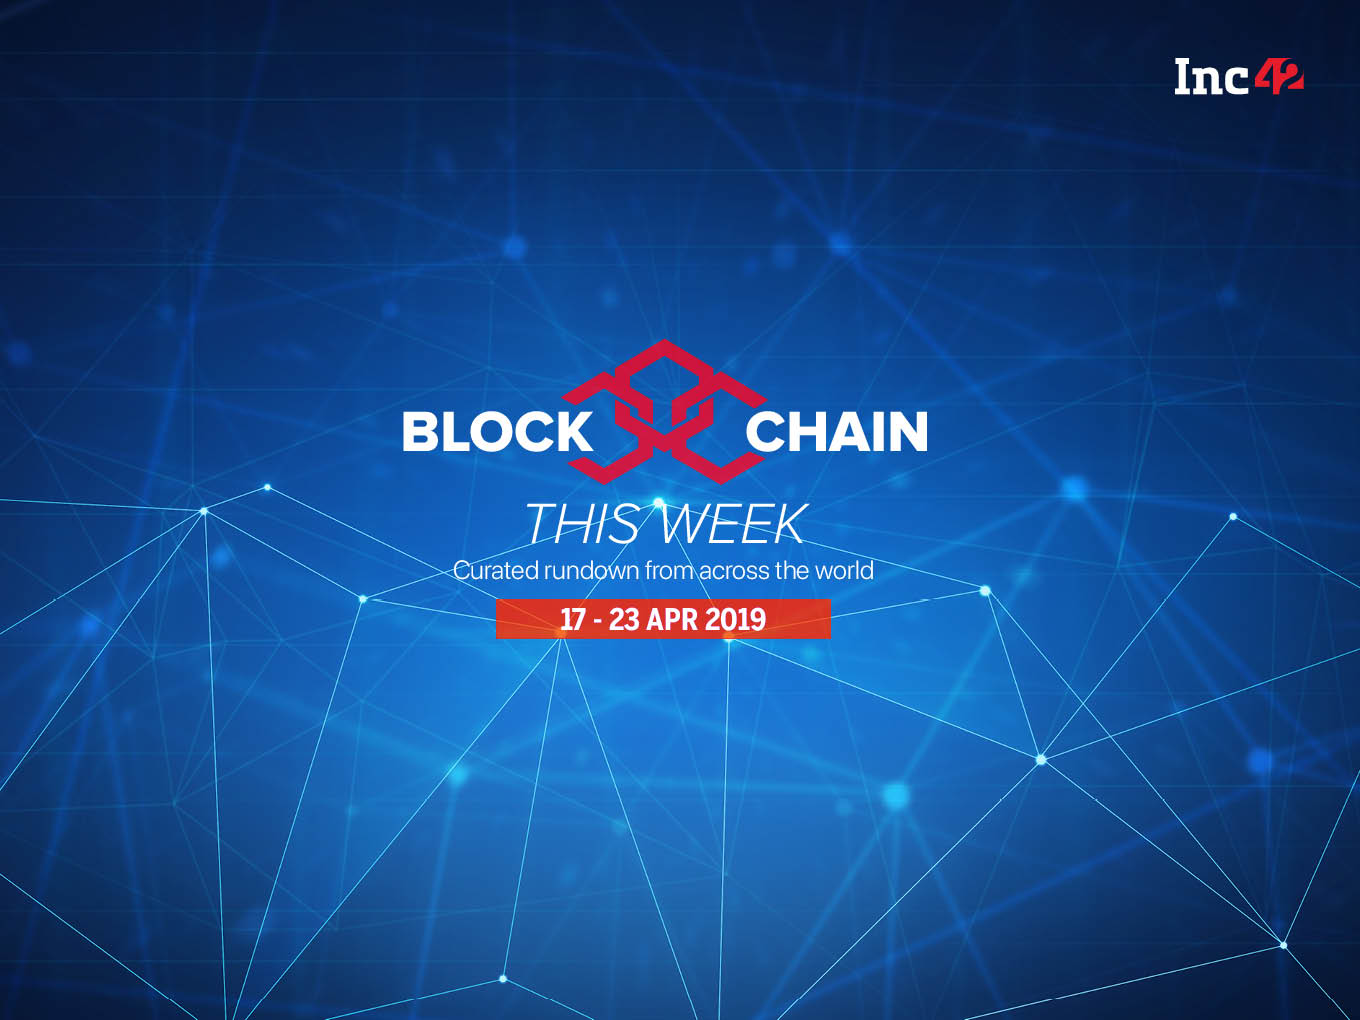 Blockchain This Week: Infibeam, Primechain To Develop Blockchain Invoicing Platform And More